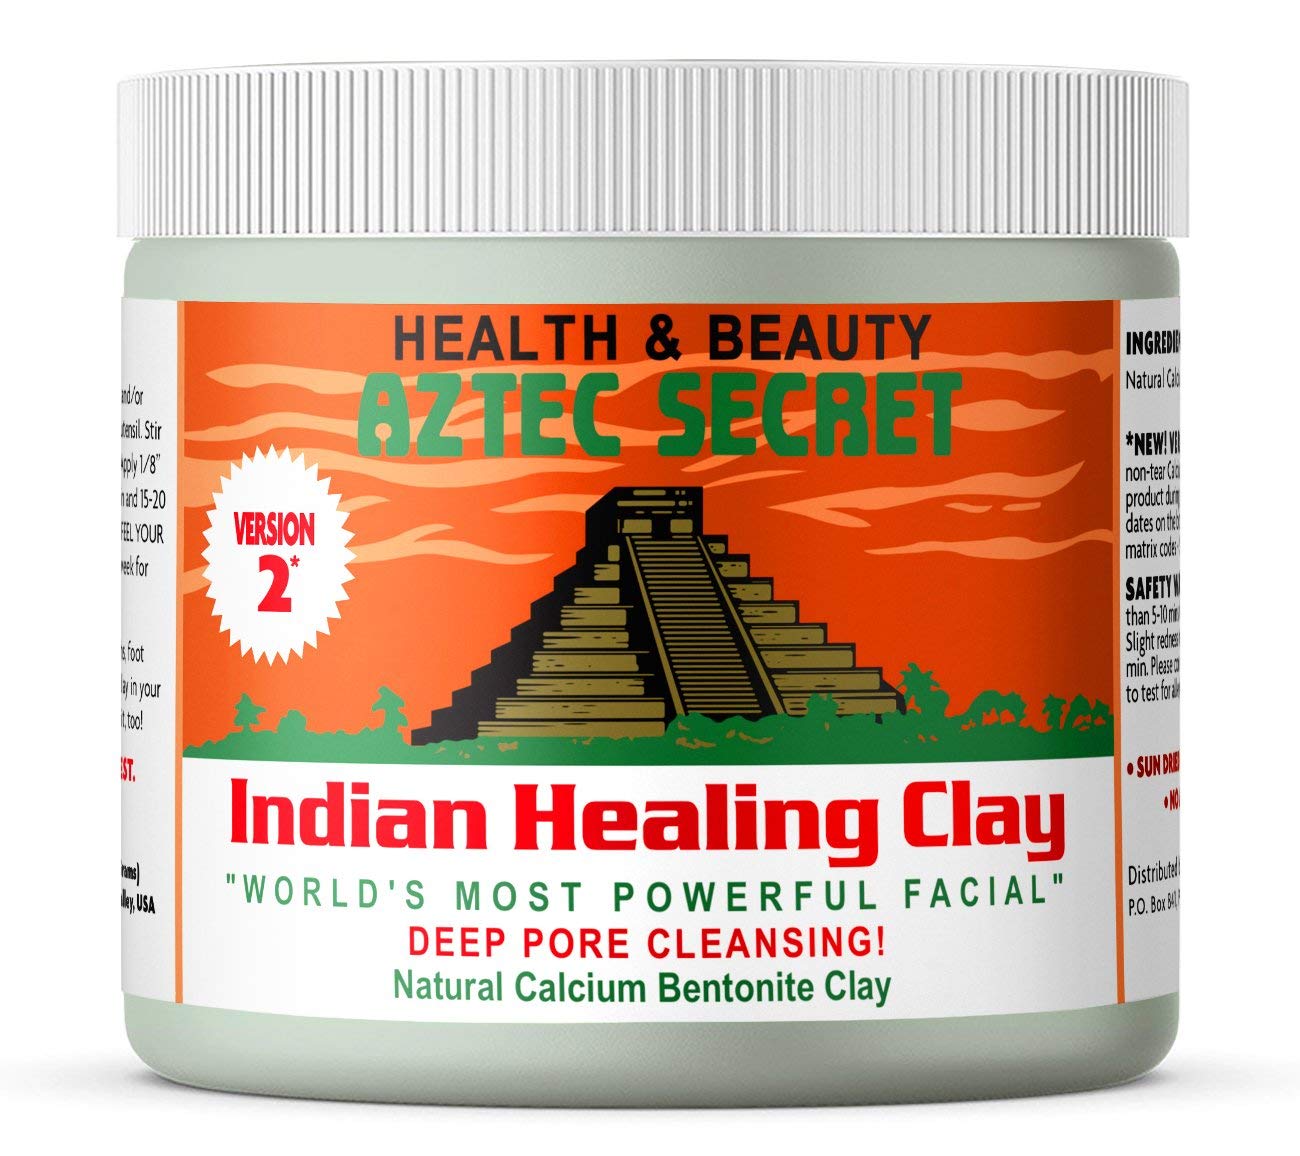 Aztec Secret – Indian Healing 100% Natural Calcium Bentonite Clay Deep Pore Cleansing Facial & Body Mask  - 1 lb (453g)